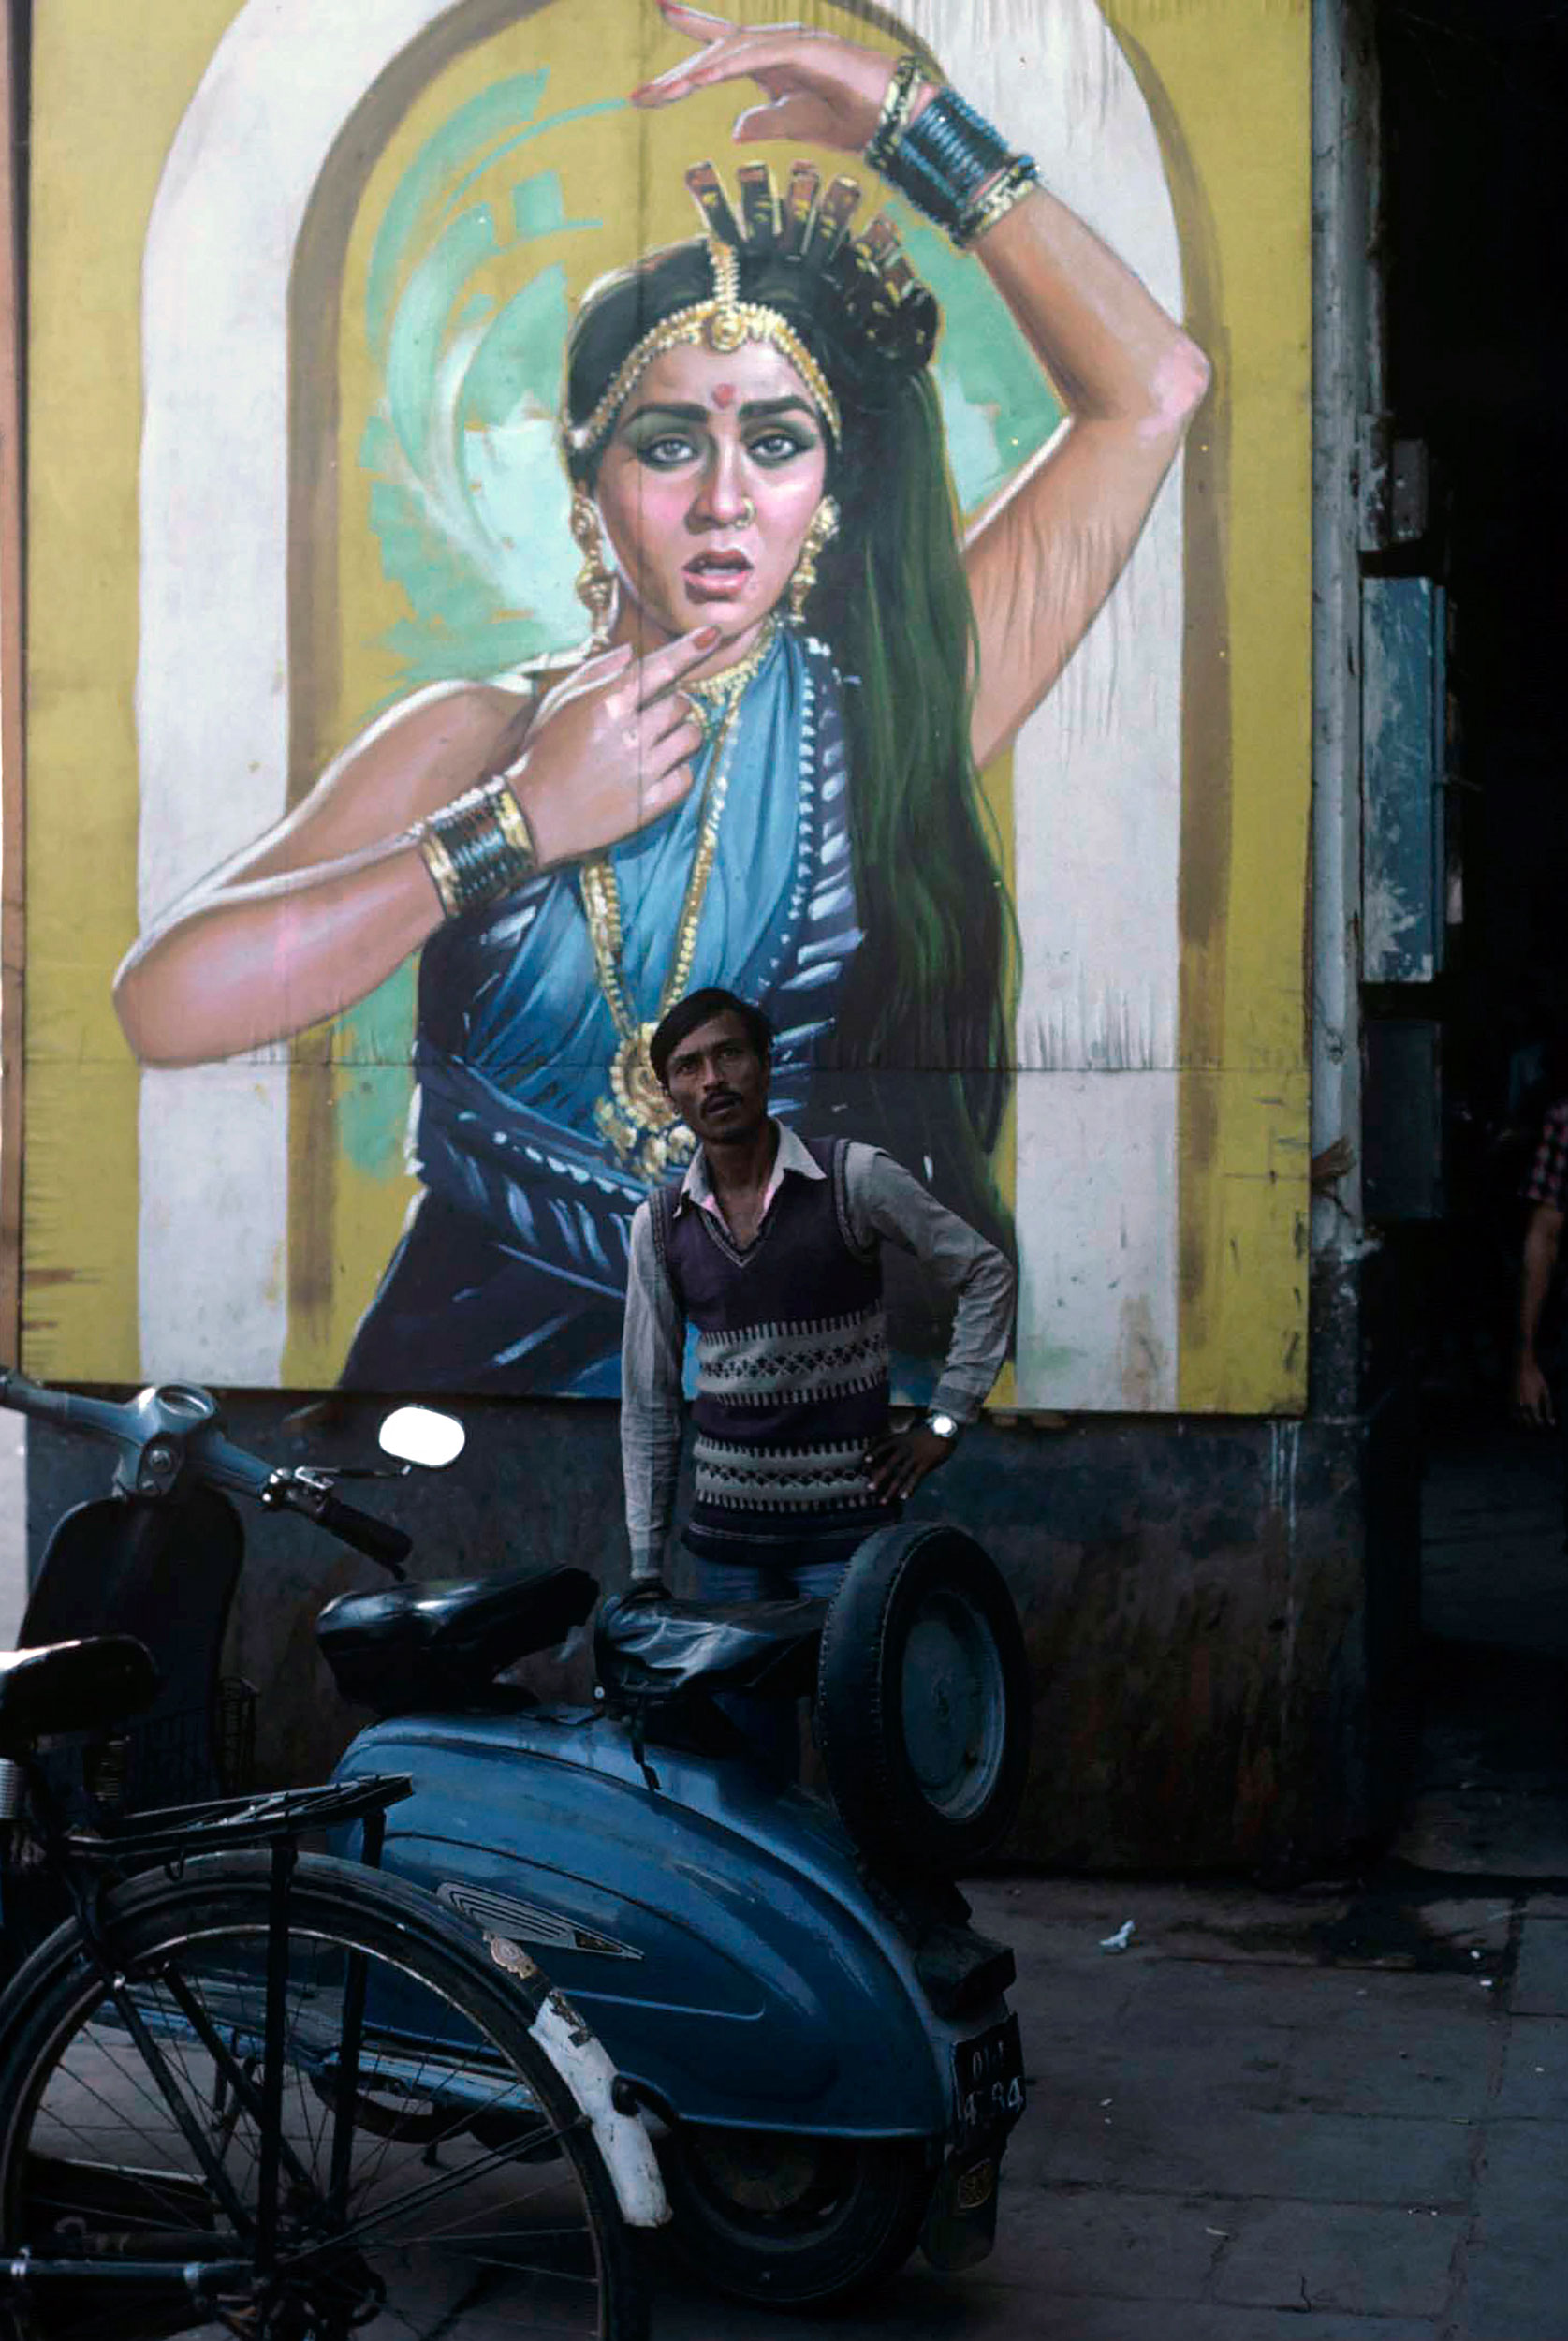 Man with Movie Poster Goddess / New Delhi, India